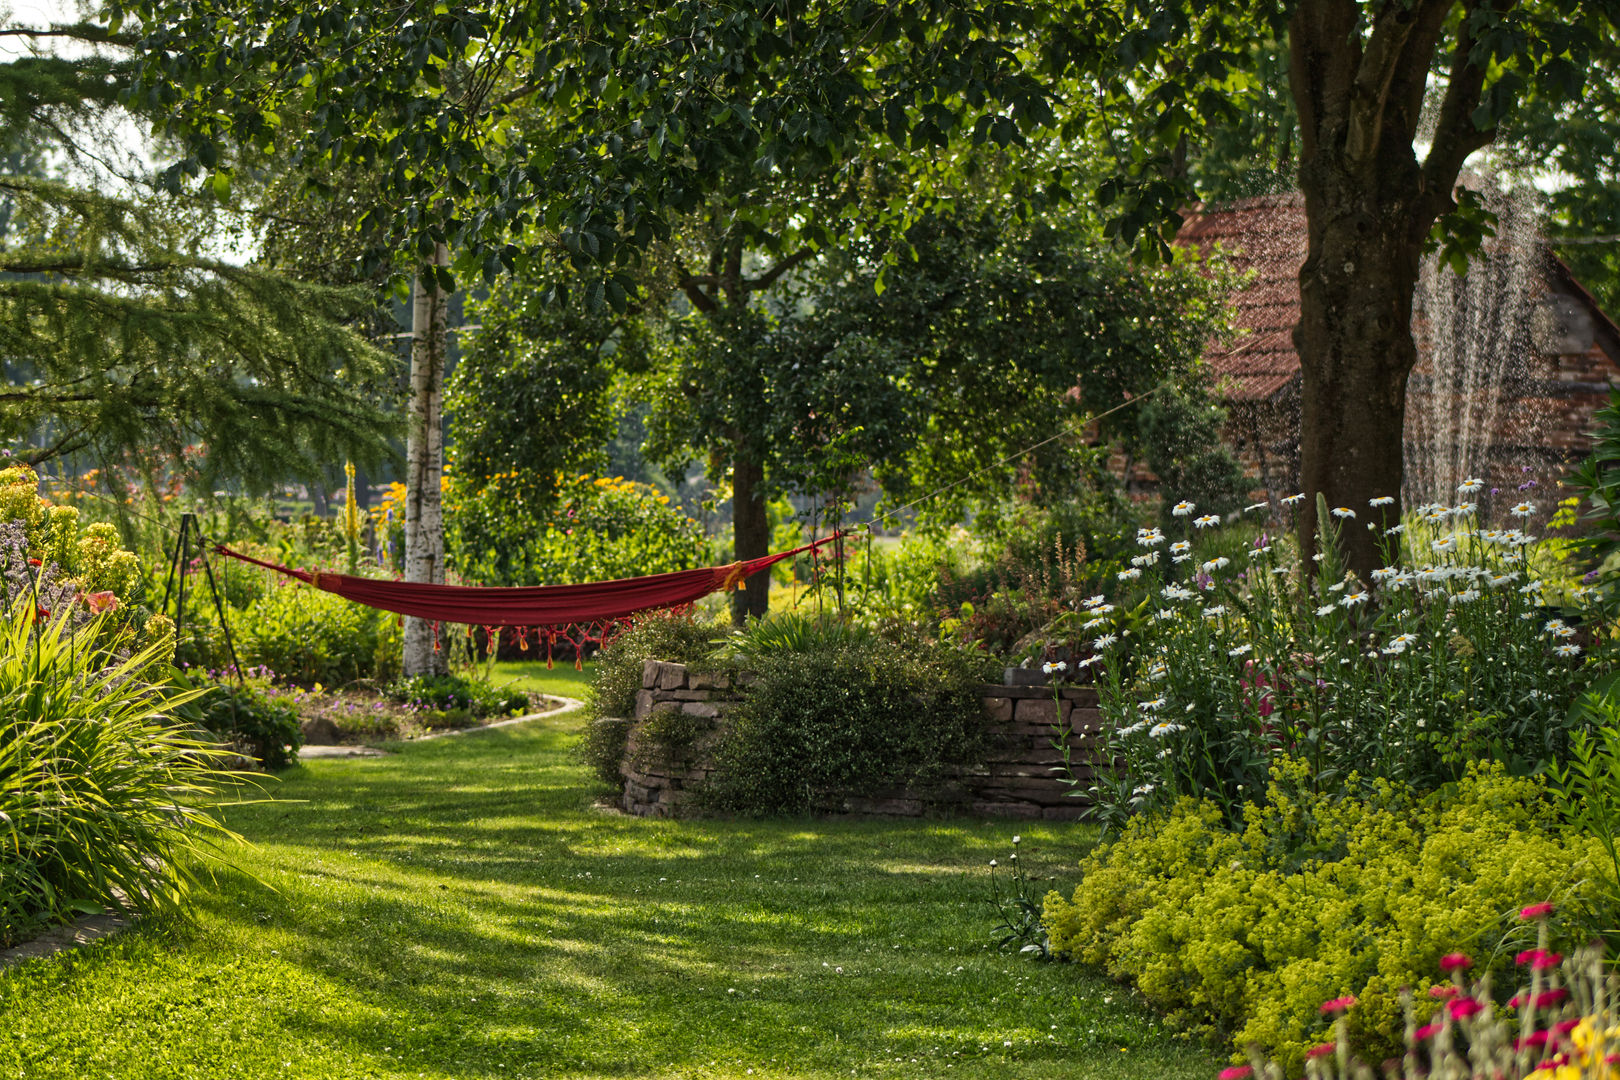 Landhausgarten, Paus Gartendesign Paus Gartendesign Country style garden